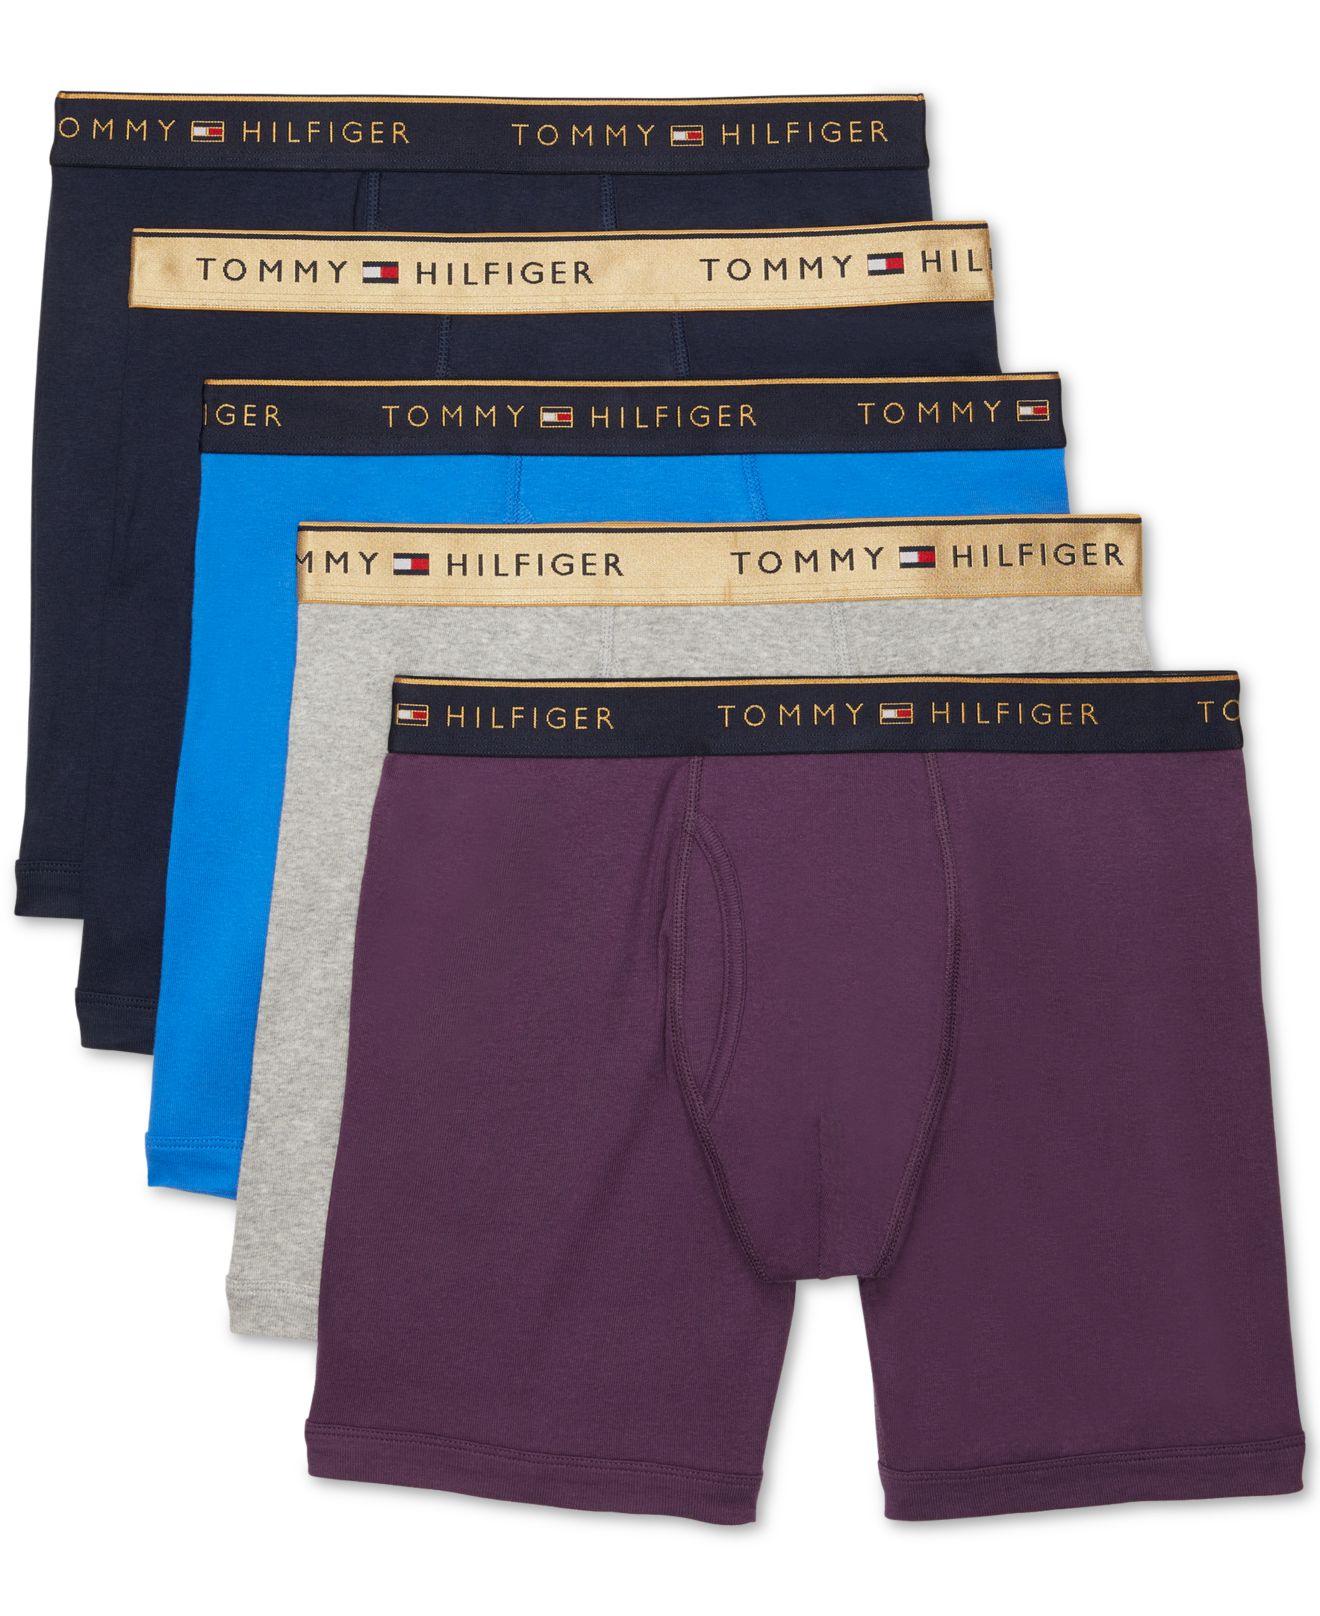 Tommy Hilfiger 5-pk. Cotton Classics Boxer Briefs in Purple for Men - Lyst